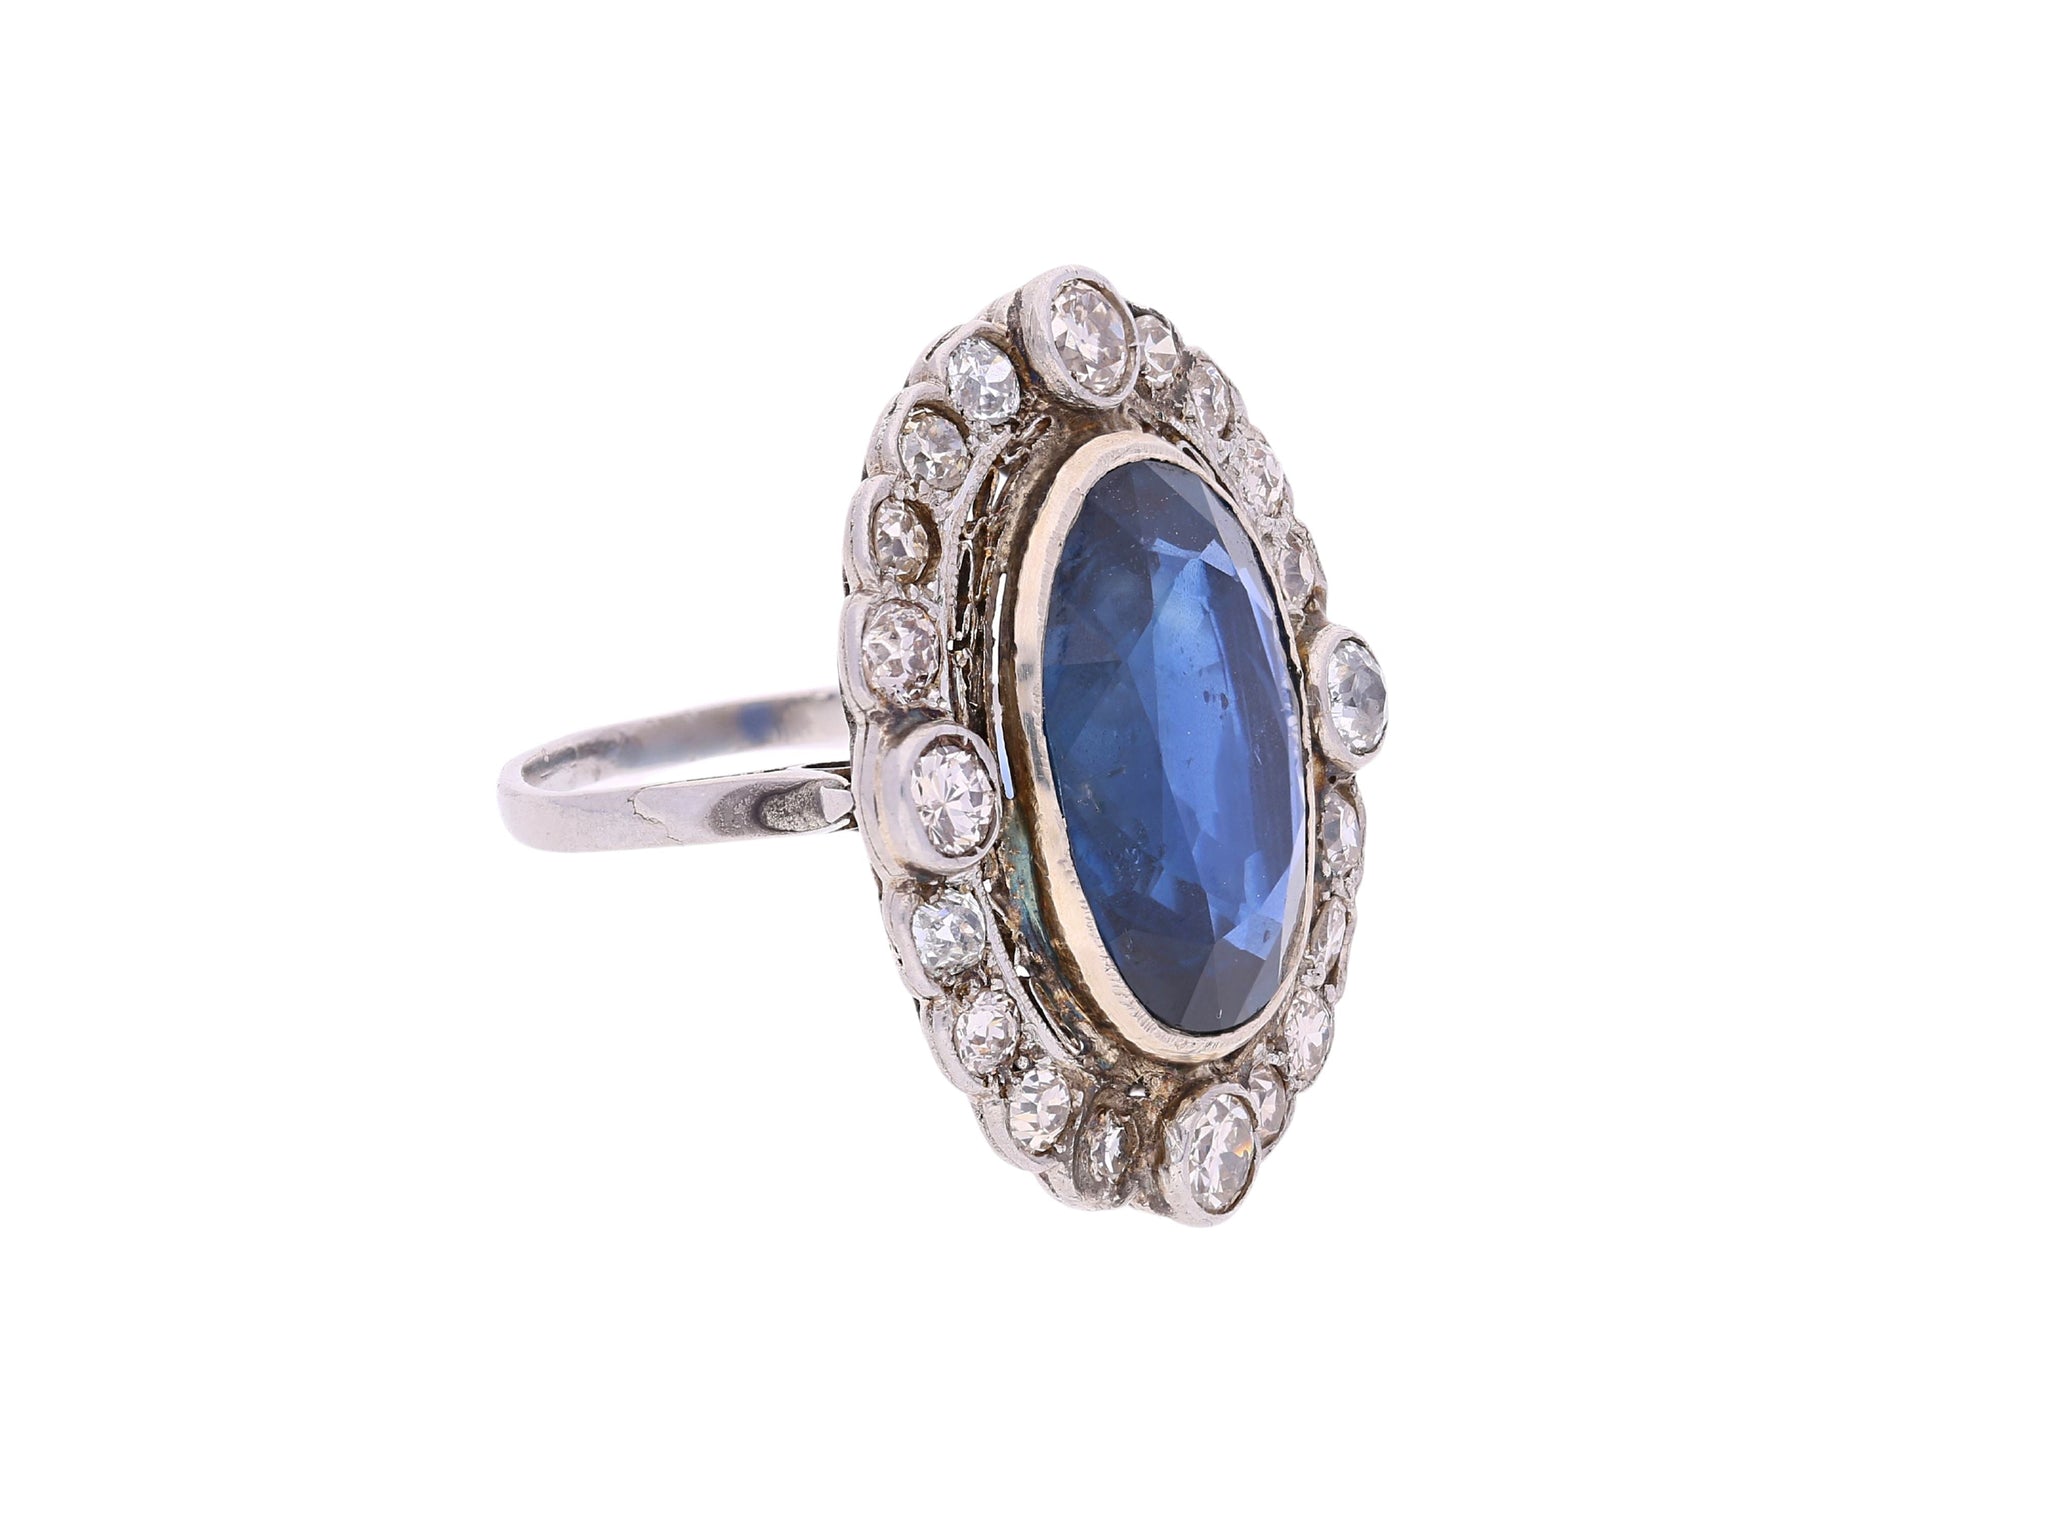 19th Century Victorian Era 15 Carat Burma Oval Cut Sapphire and Diamond Ring Rings